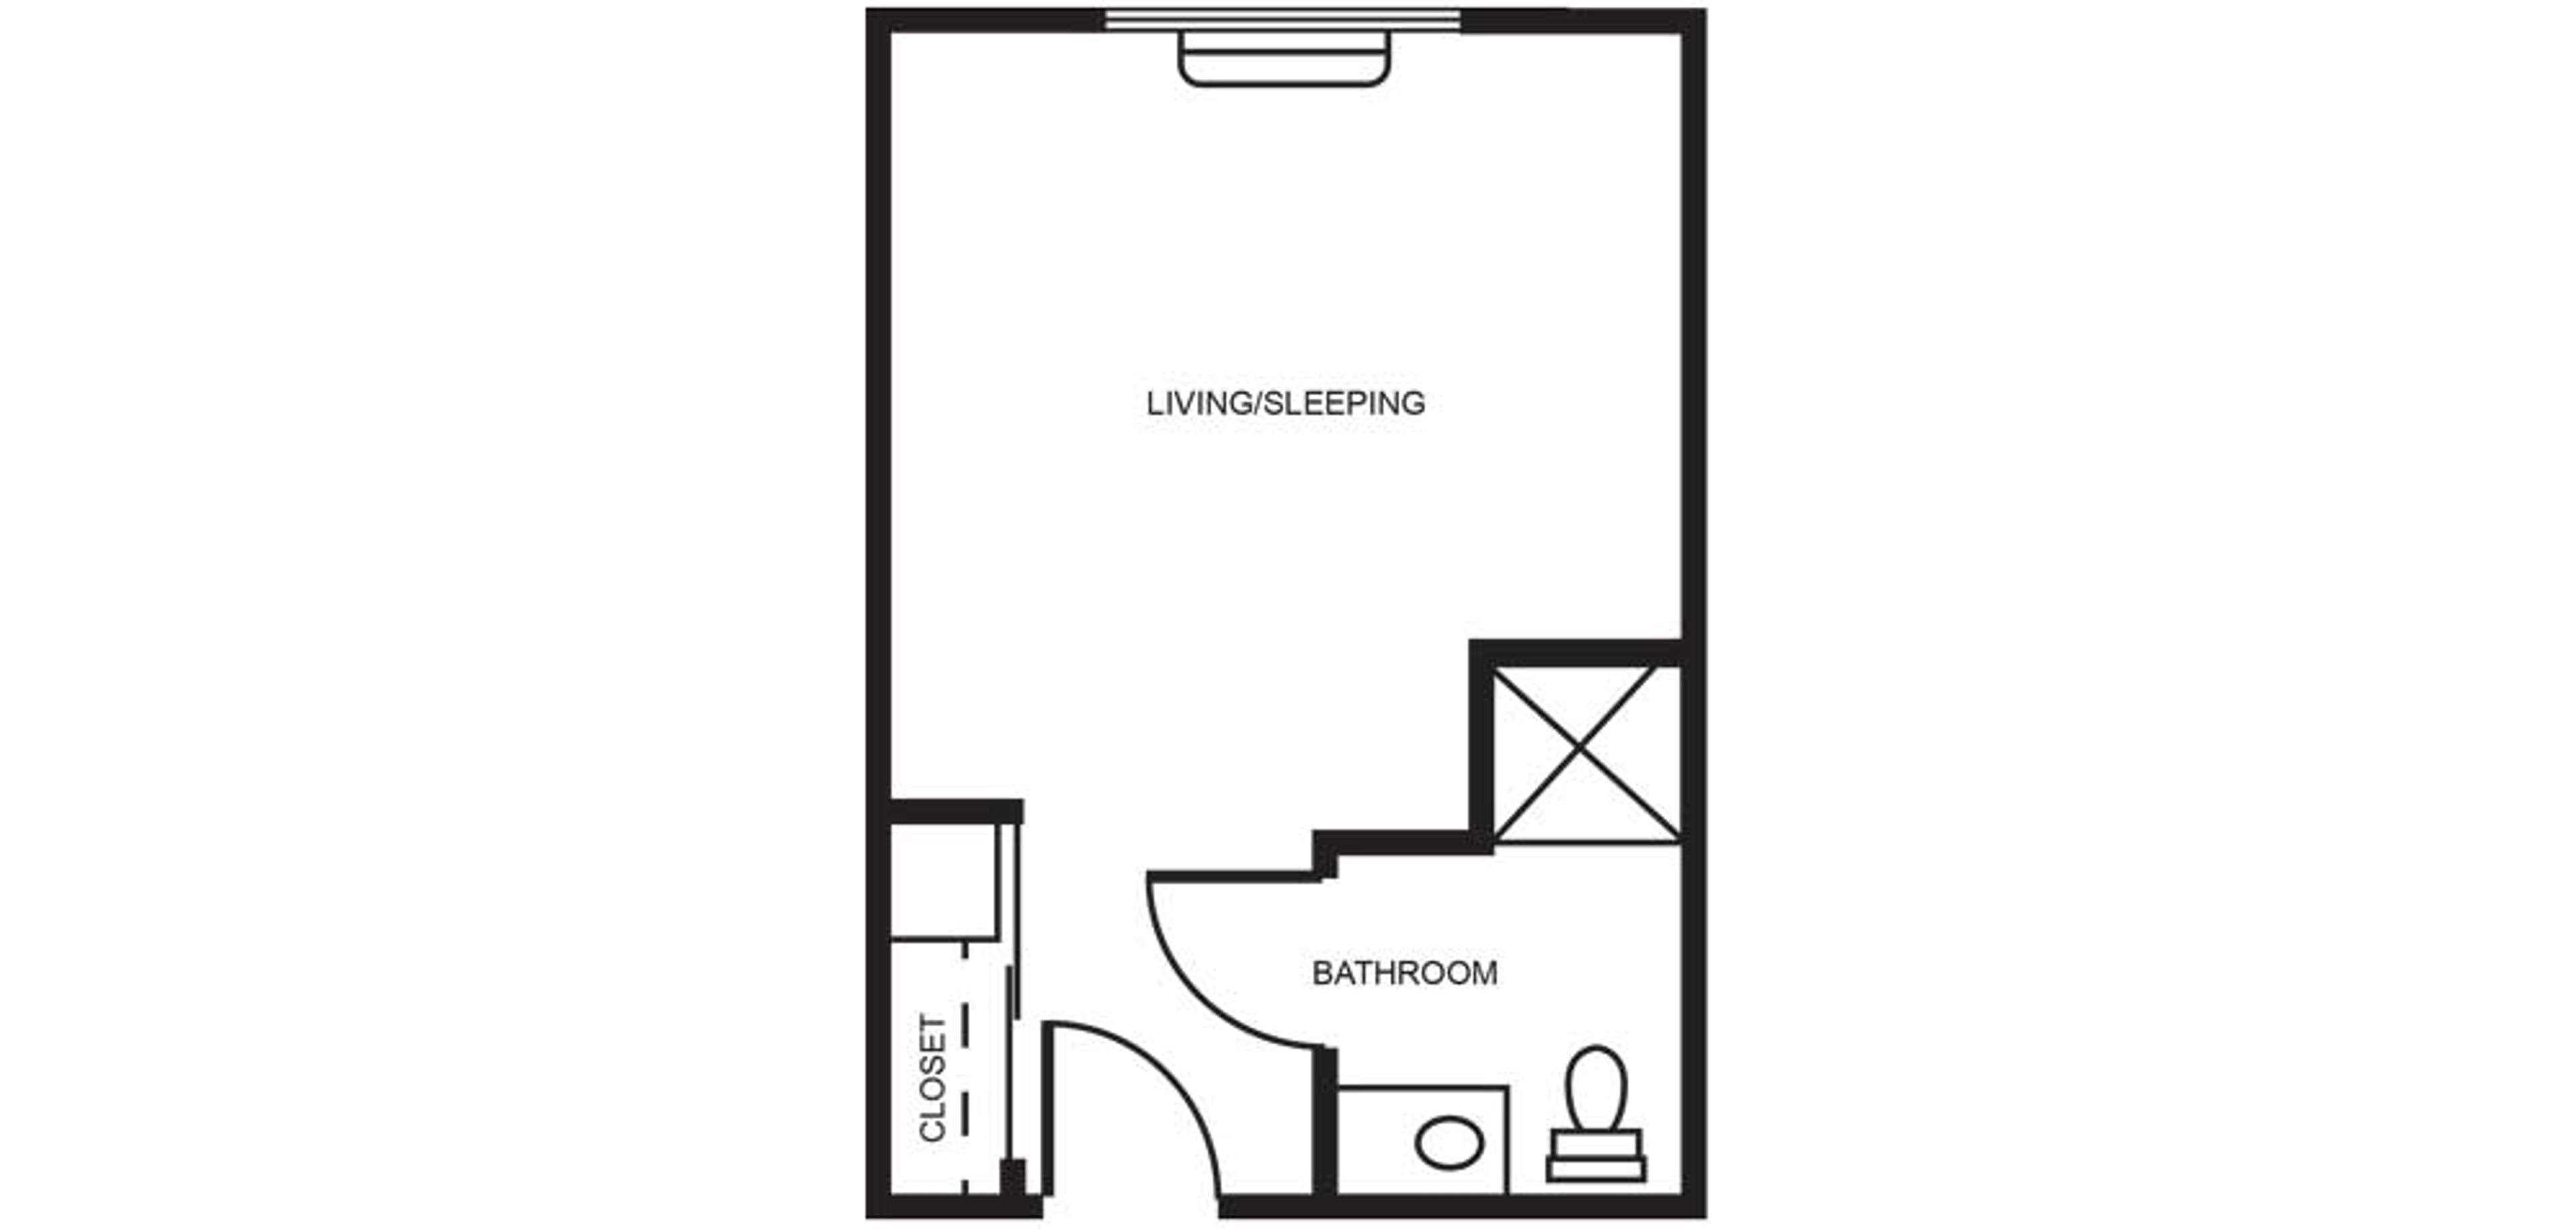 Floorplan - Glen Oaks - Private suite